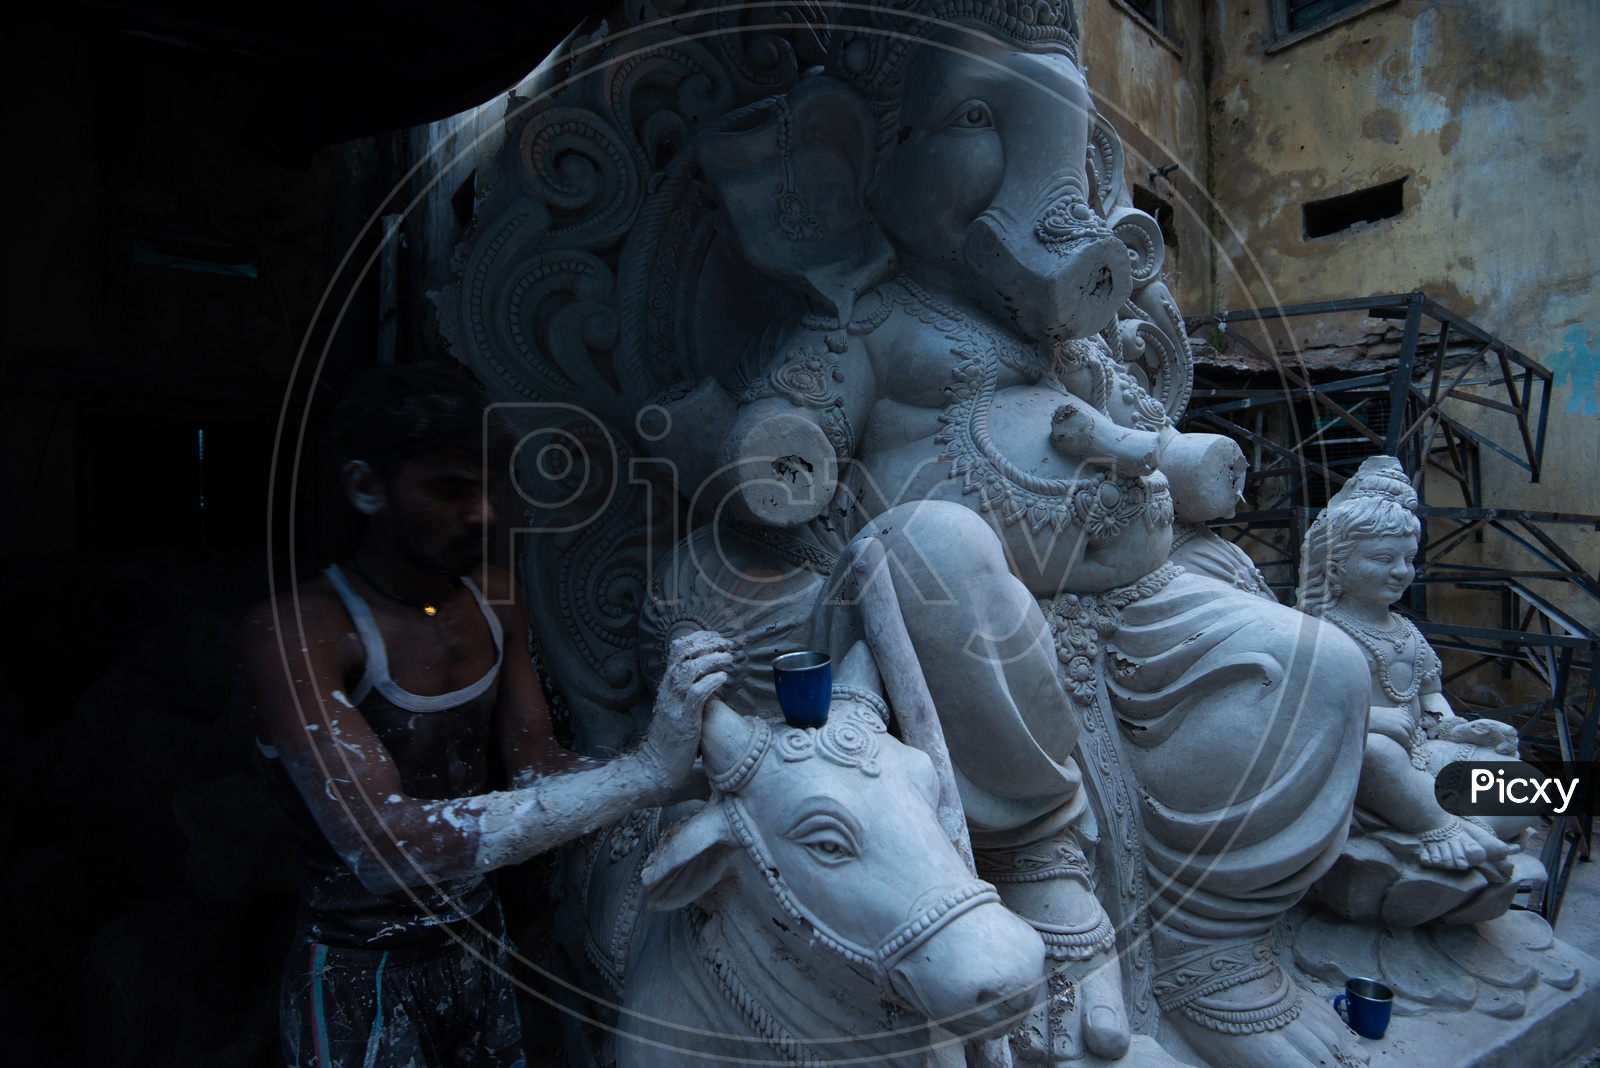 Artists Crafting Ganesh idols of Elephant Headed Hindu God